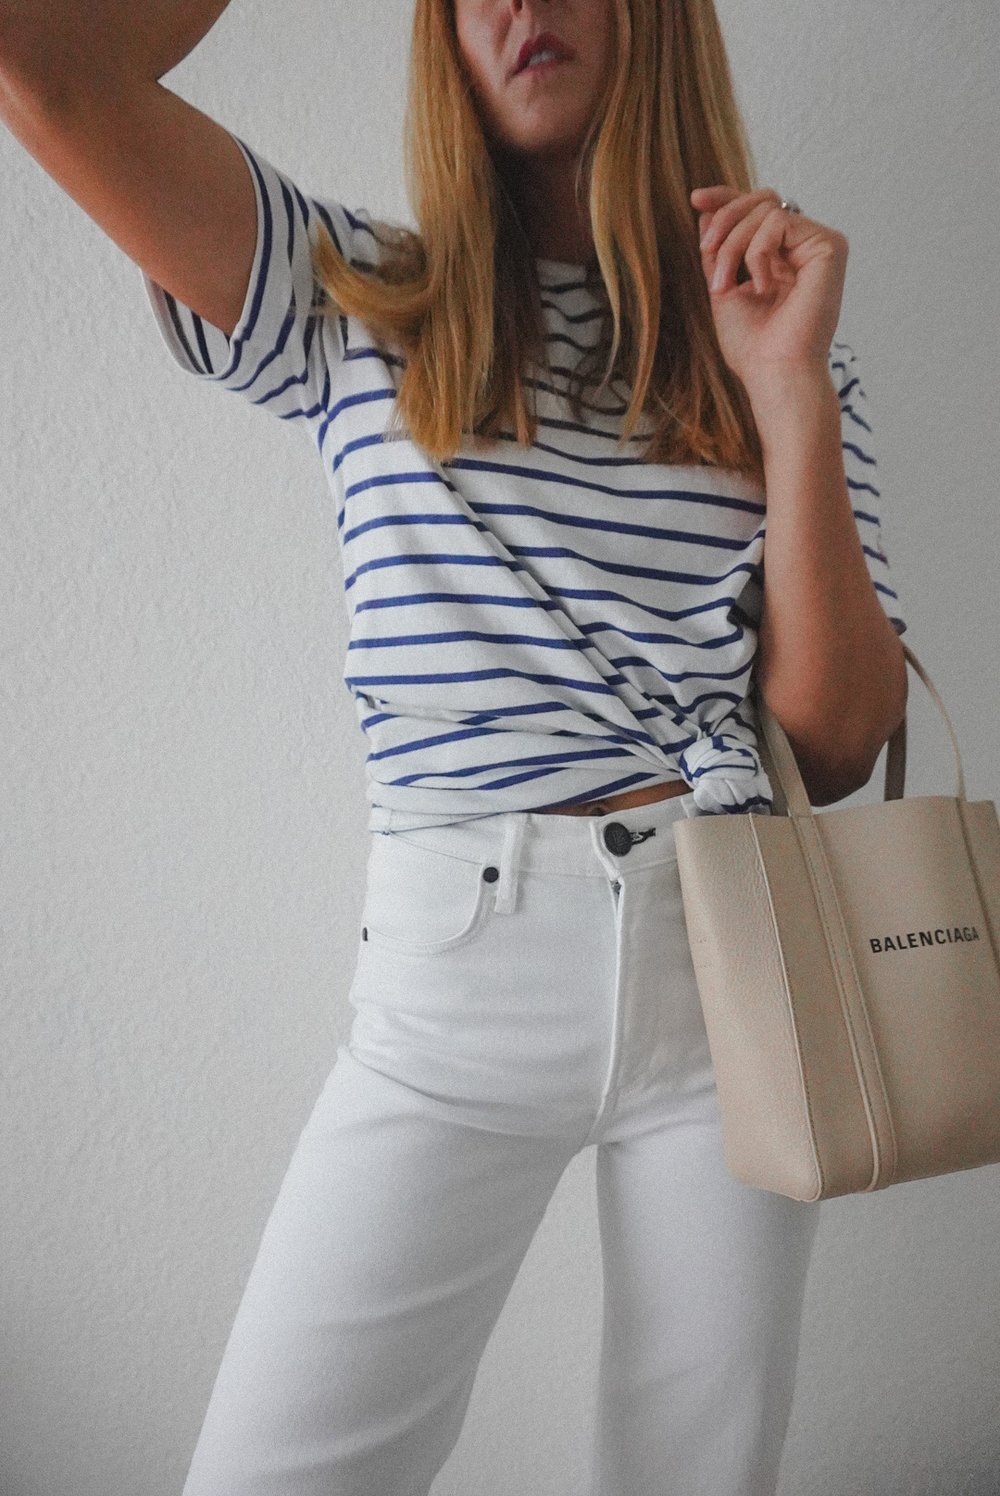  Jessica Ashley wearing white denim, striped t shirt and Balenciaga handbag outfit idea with Balenciaga xxs tote  